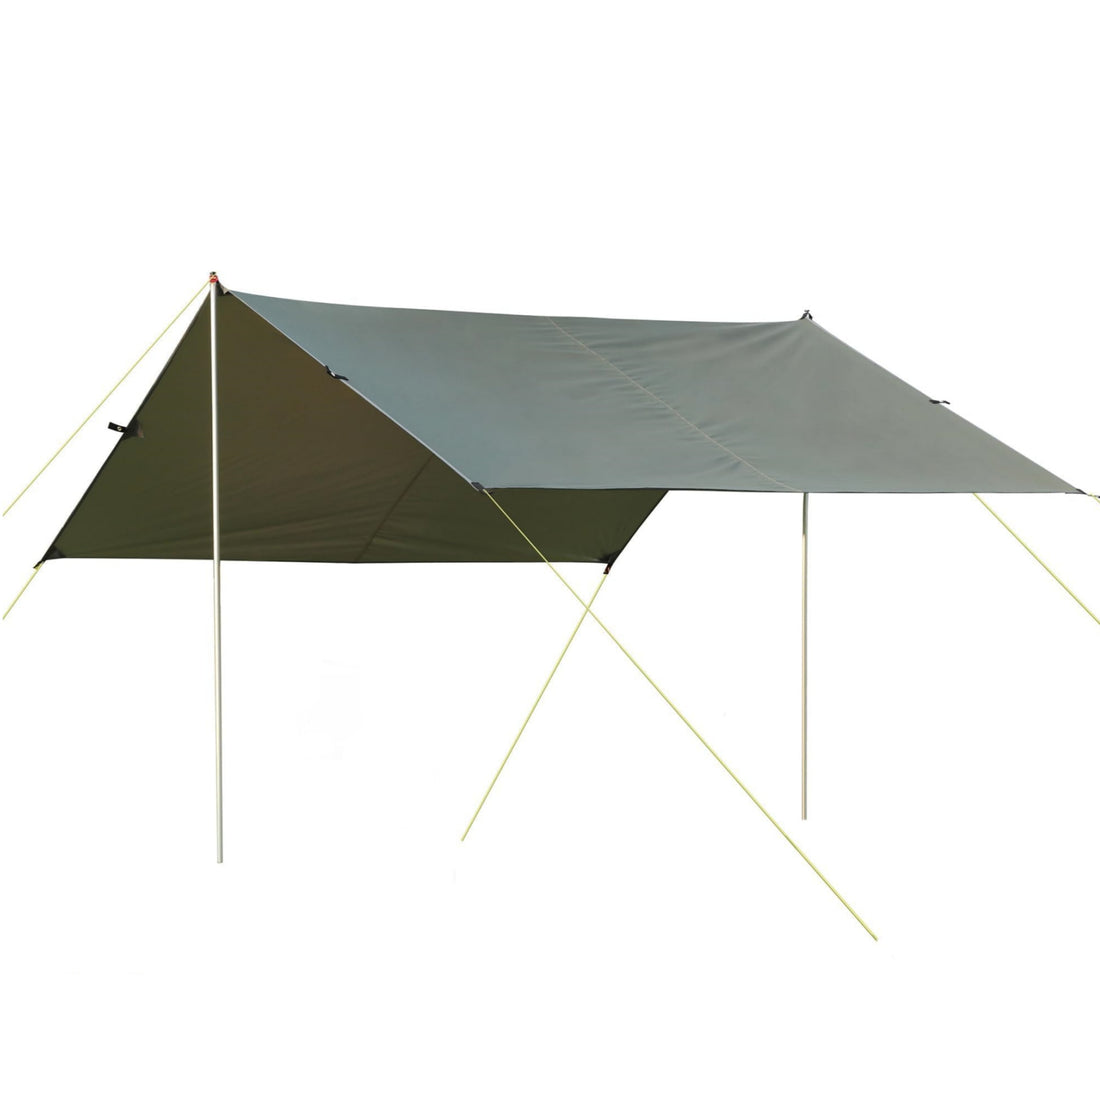 Camping Tarp, Hammock Rain Fly Camping Tarp Waterproof with 2 Aluminum Poles, Lightweight Backpack Tent tarp for Traveling, Green